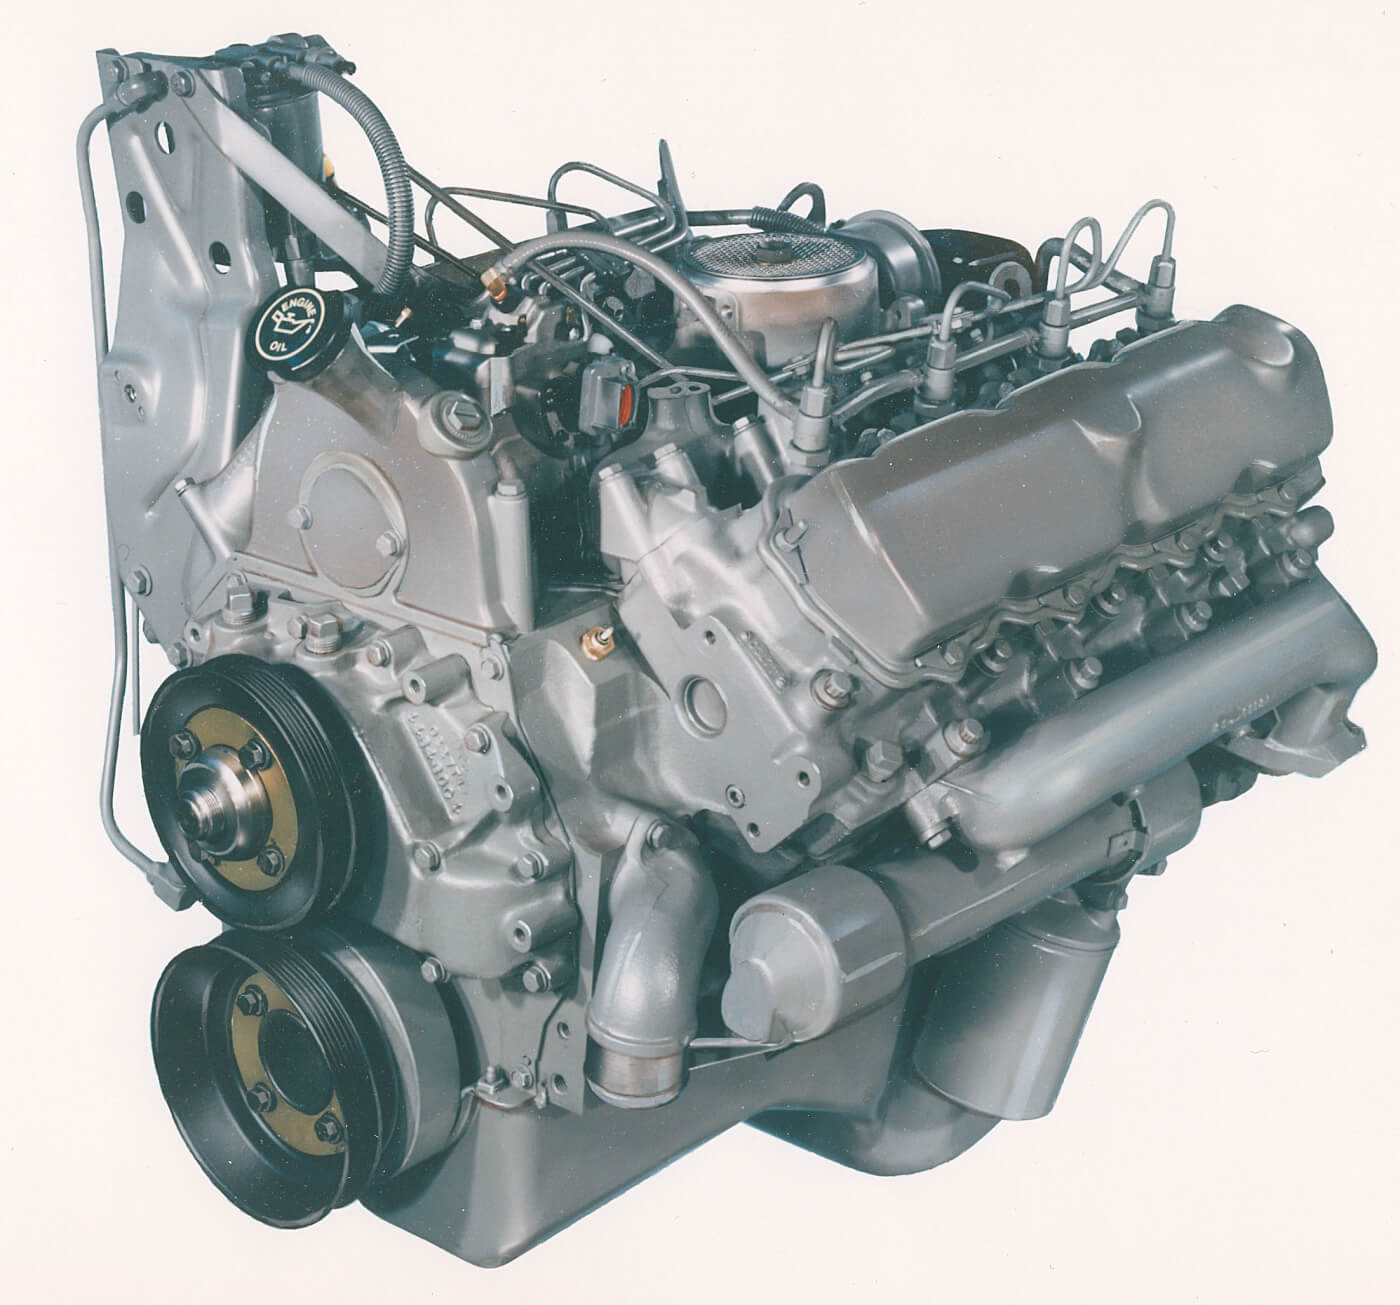 Дизель 3.3. Ford 7.3 Diesel. Двигатель Форд 7.3 дизель. 7 3 Diesel engine Powerstroke Ford. Ford engine 6.9 Diesel.